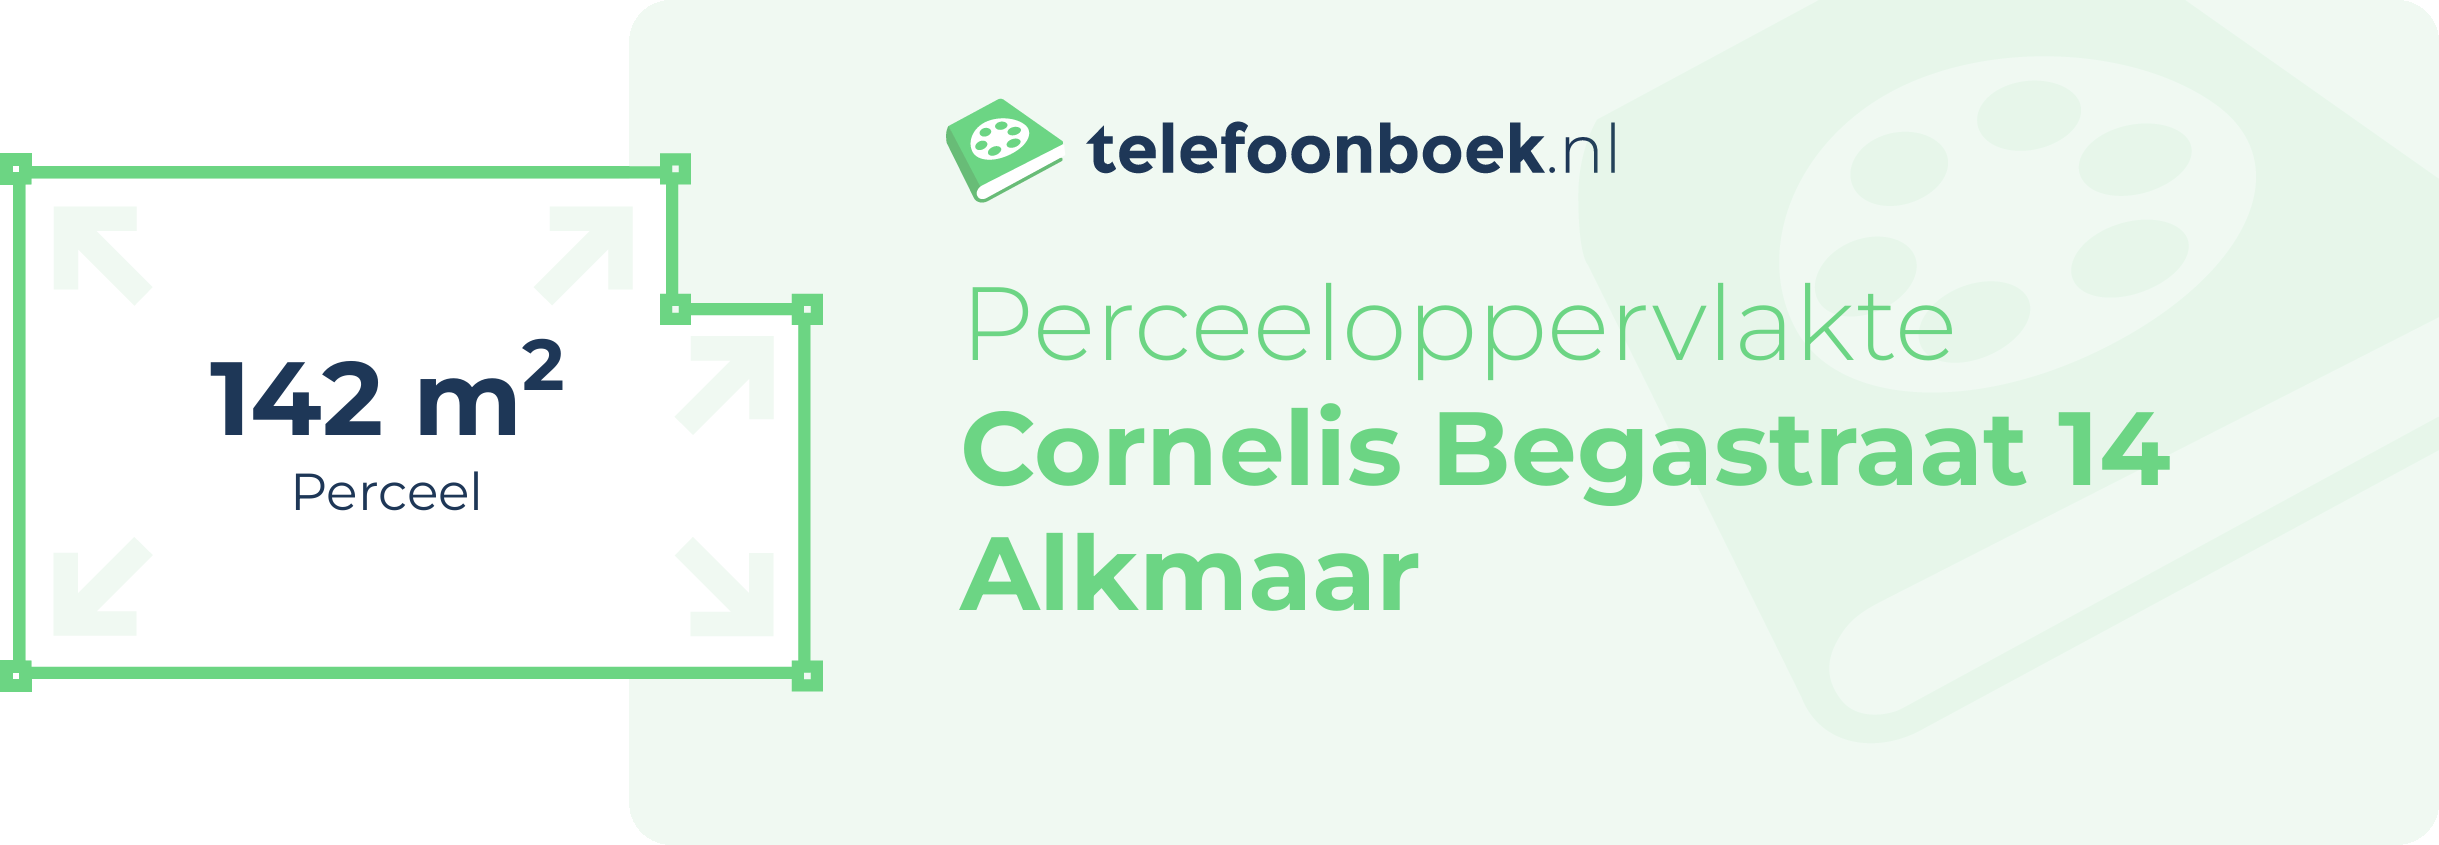 Perceeloppervlakte Cornelis Begastraat 14 Alkmaar